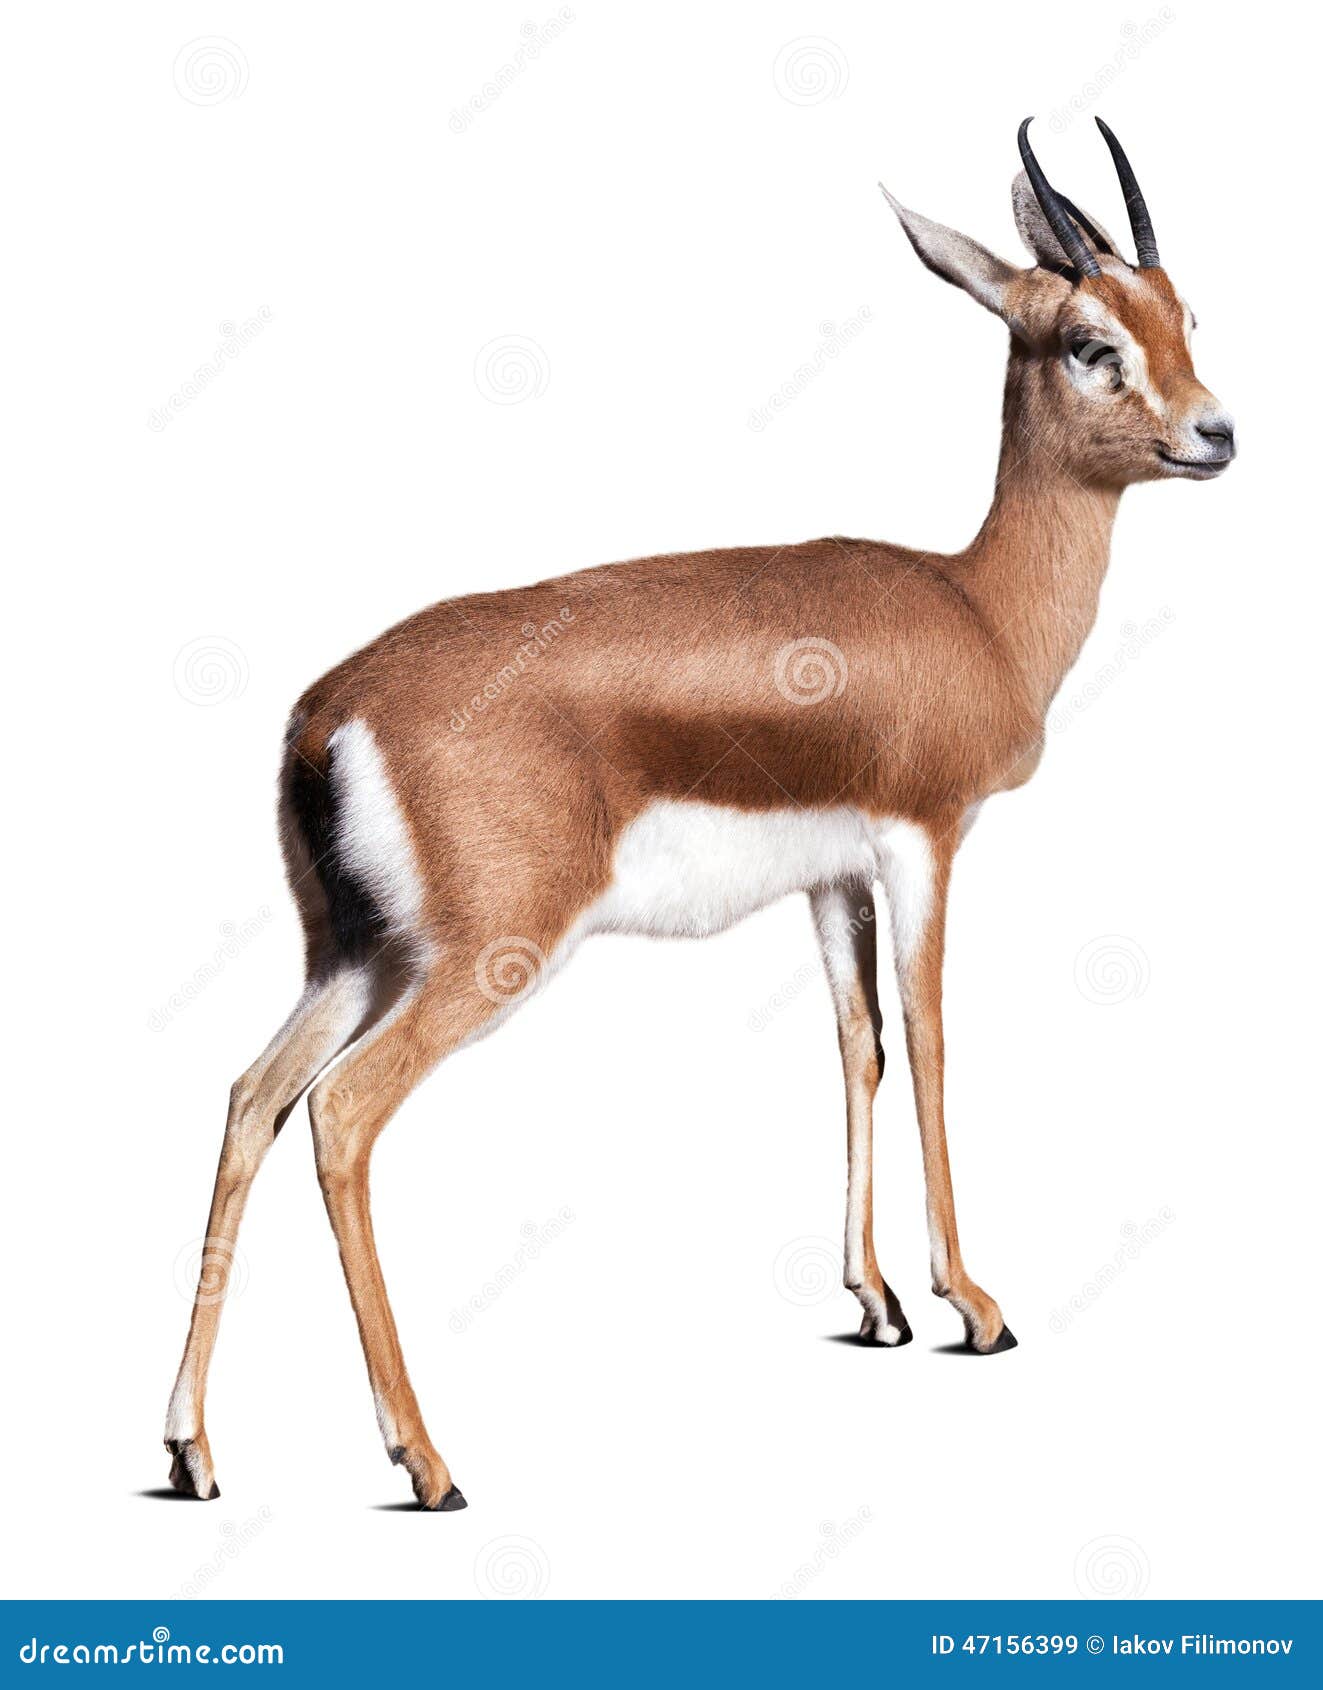 dorcas gazelle.  over white background